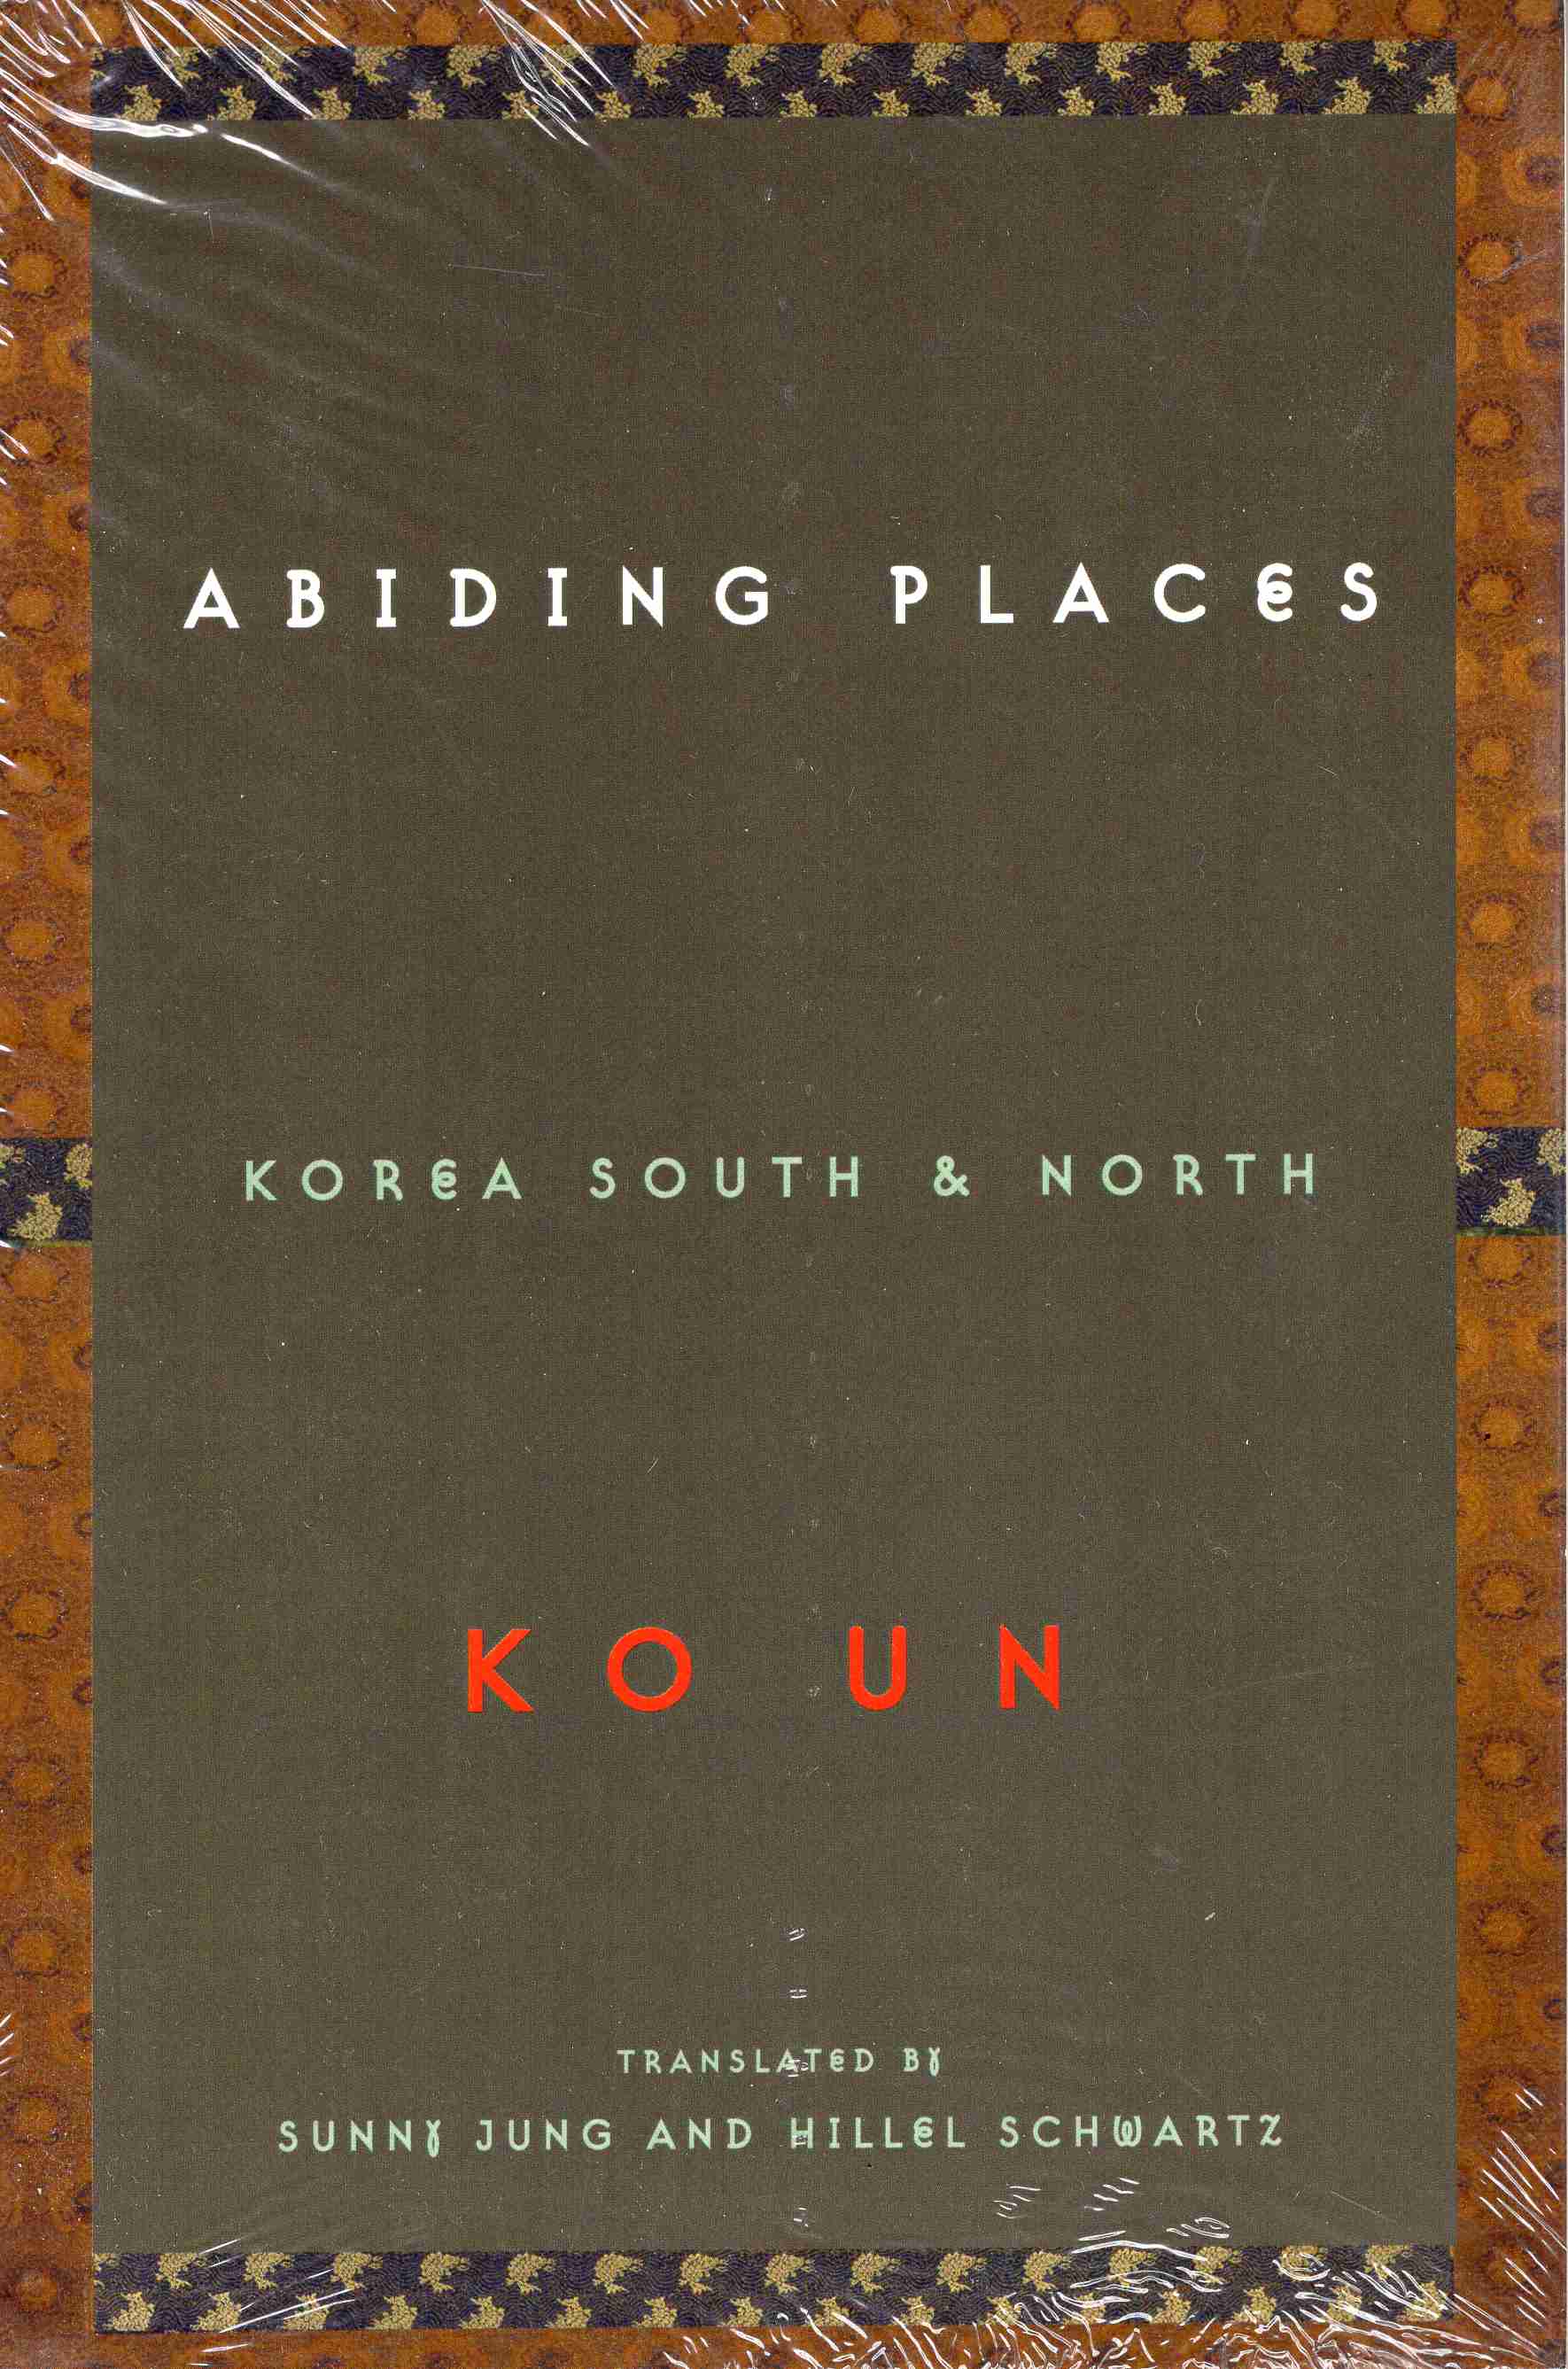 Abiding Places, Korea South & North (Paperback)